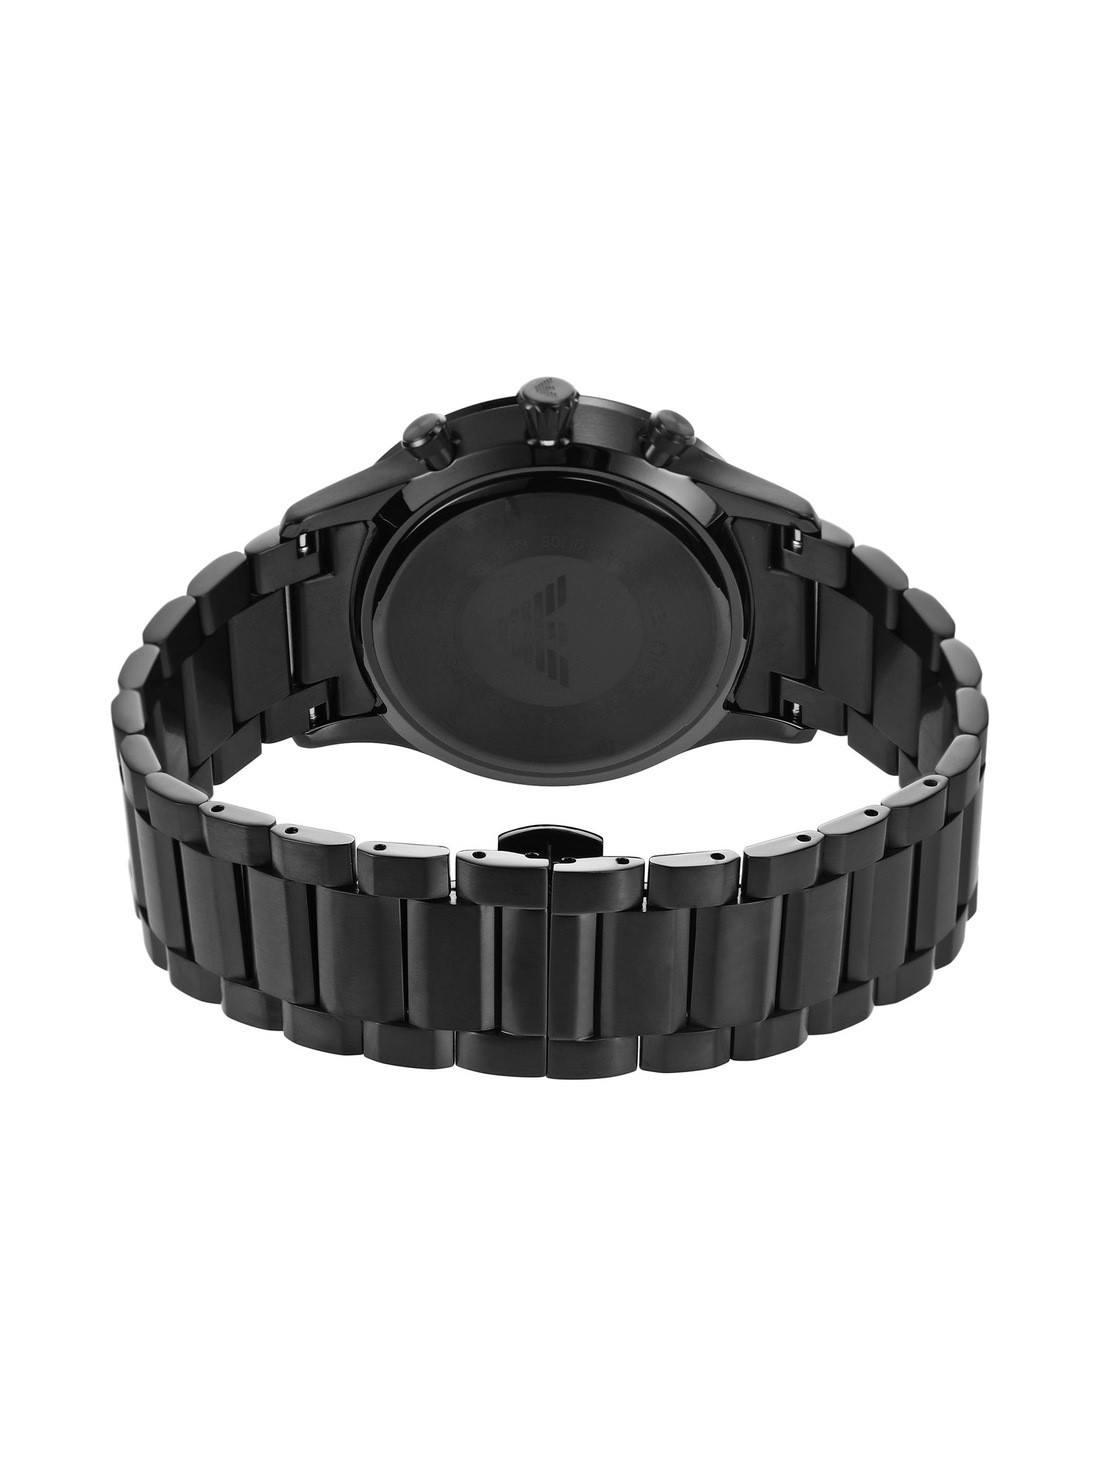 Emporio Armani Black Watch AR11349 - Watch Station India